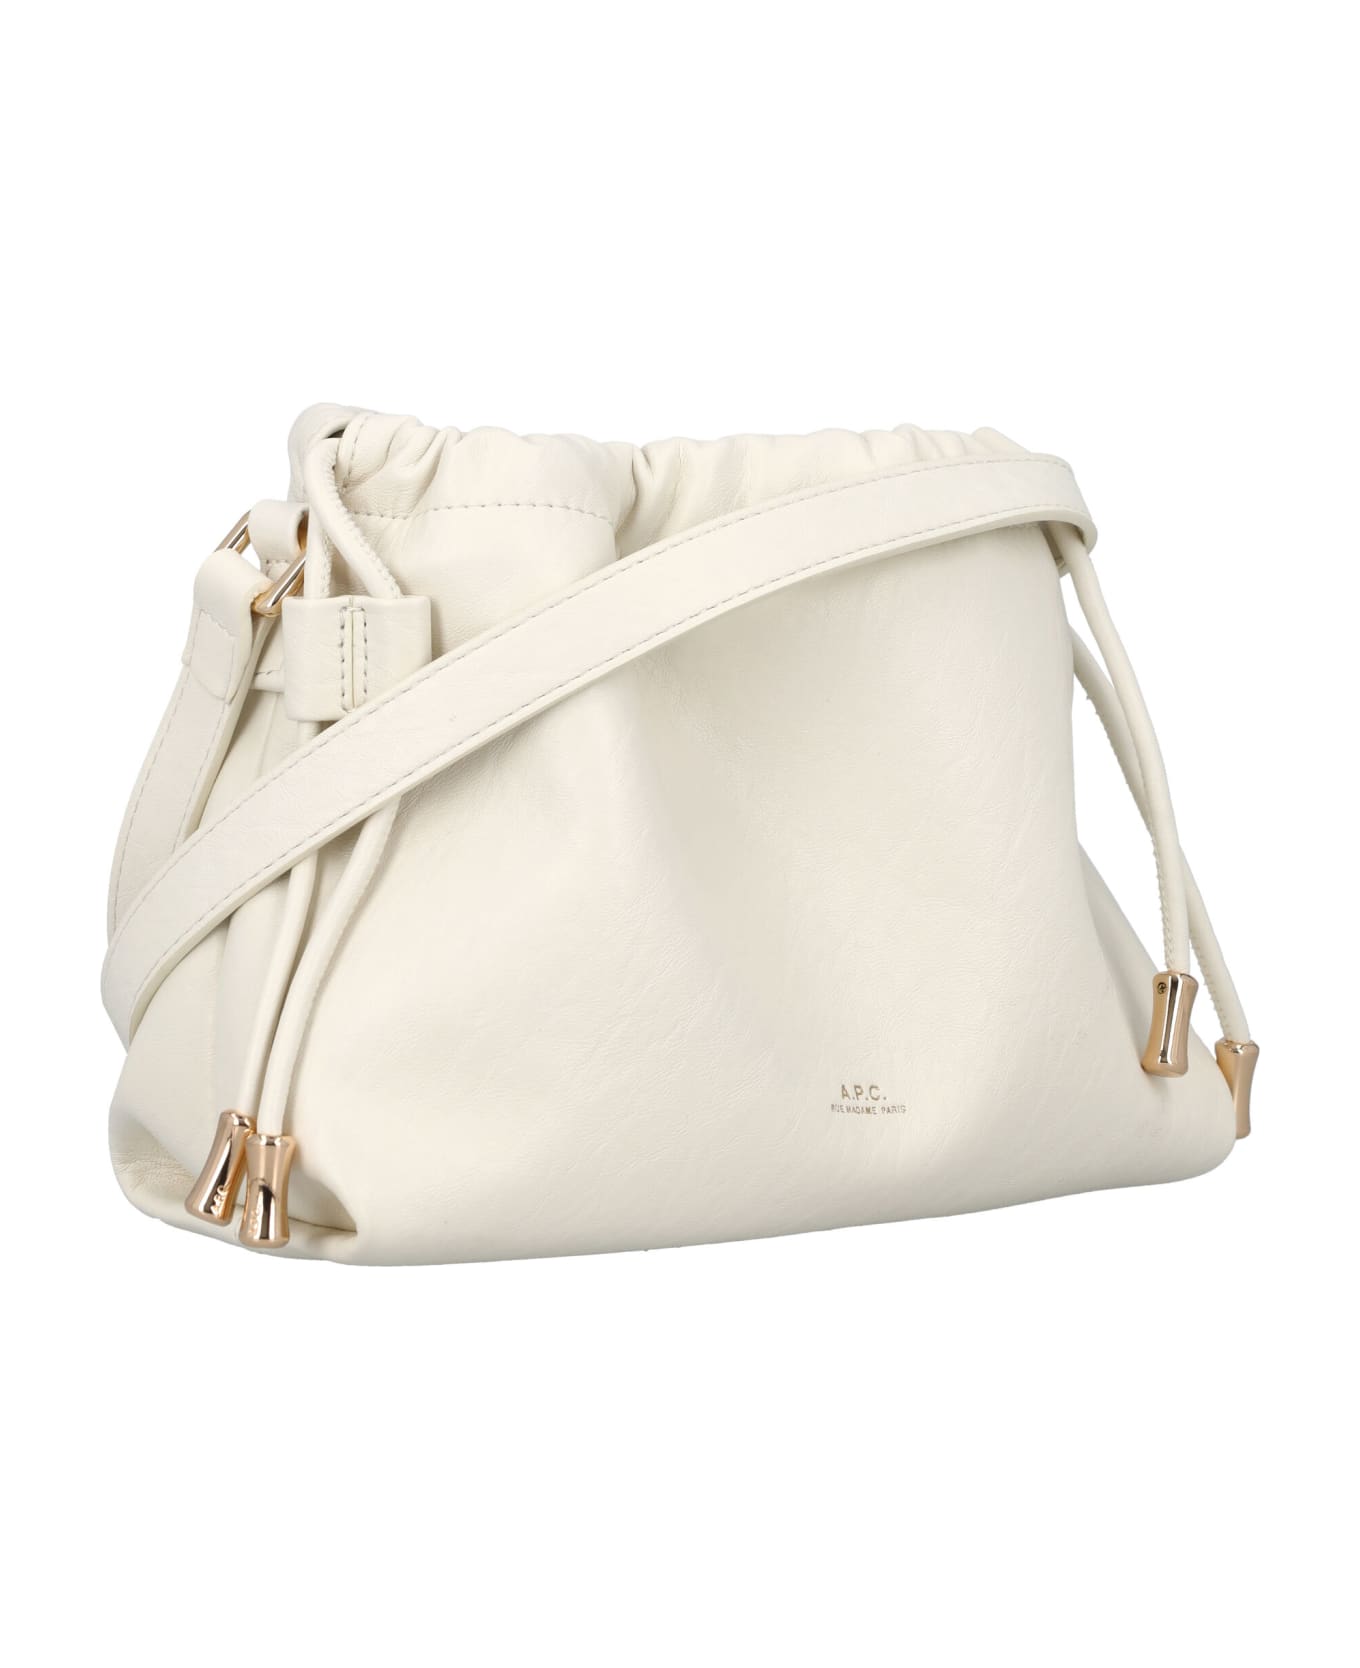 A.P.C. Ninon Mini Bag - WHITE